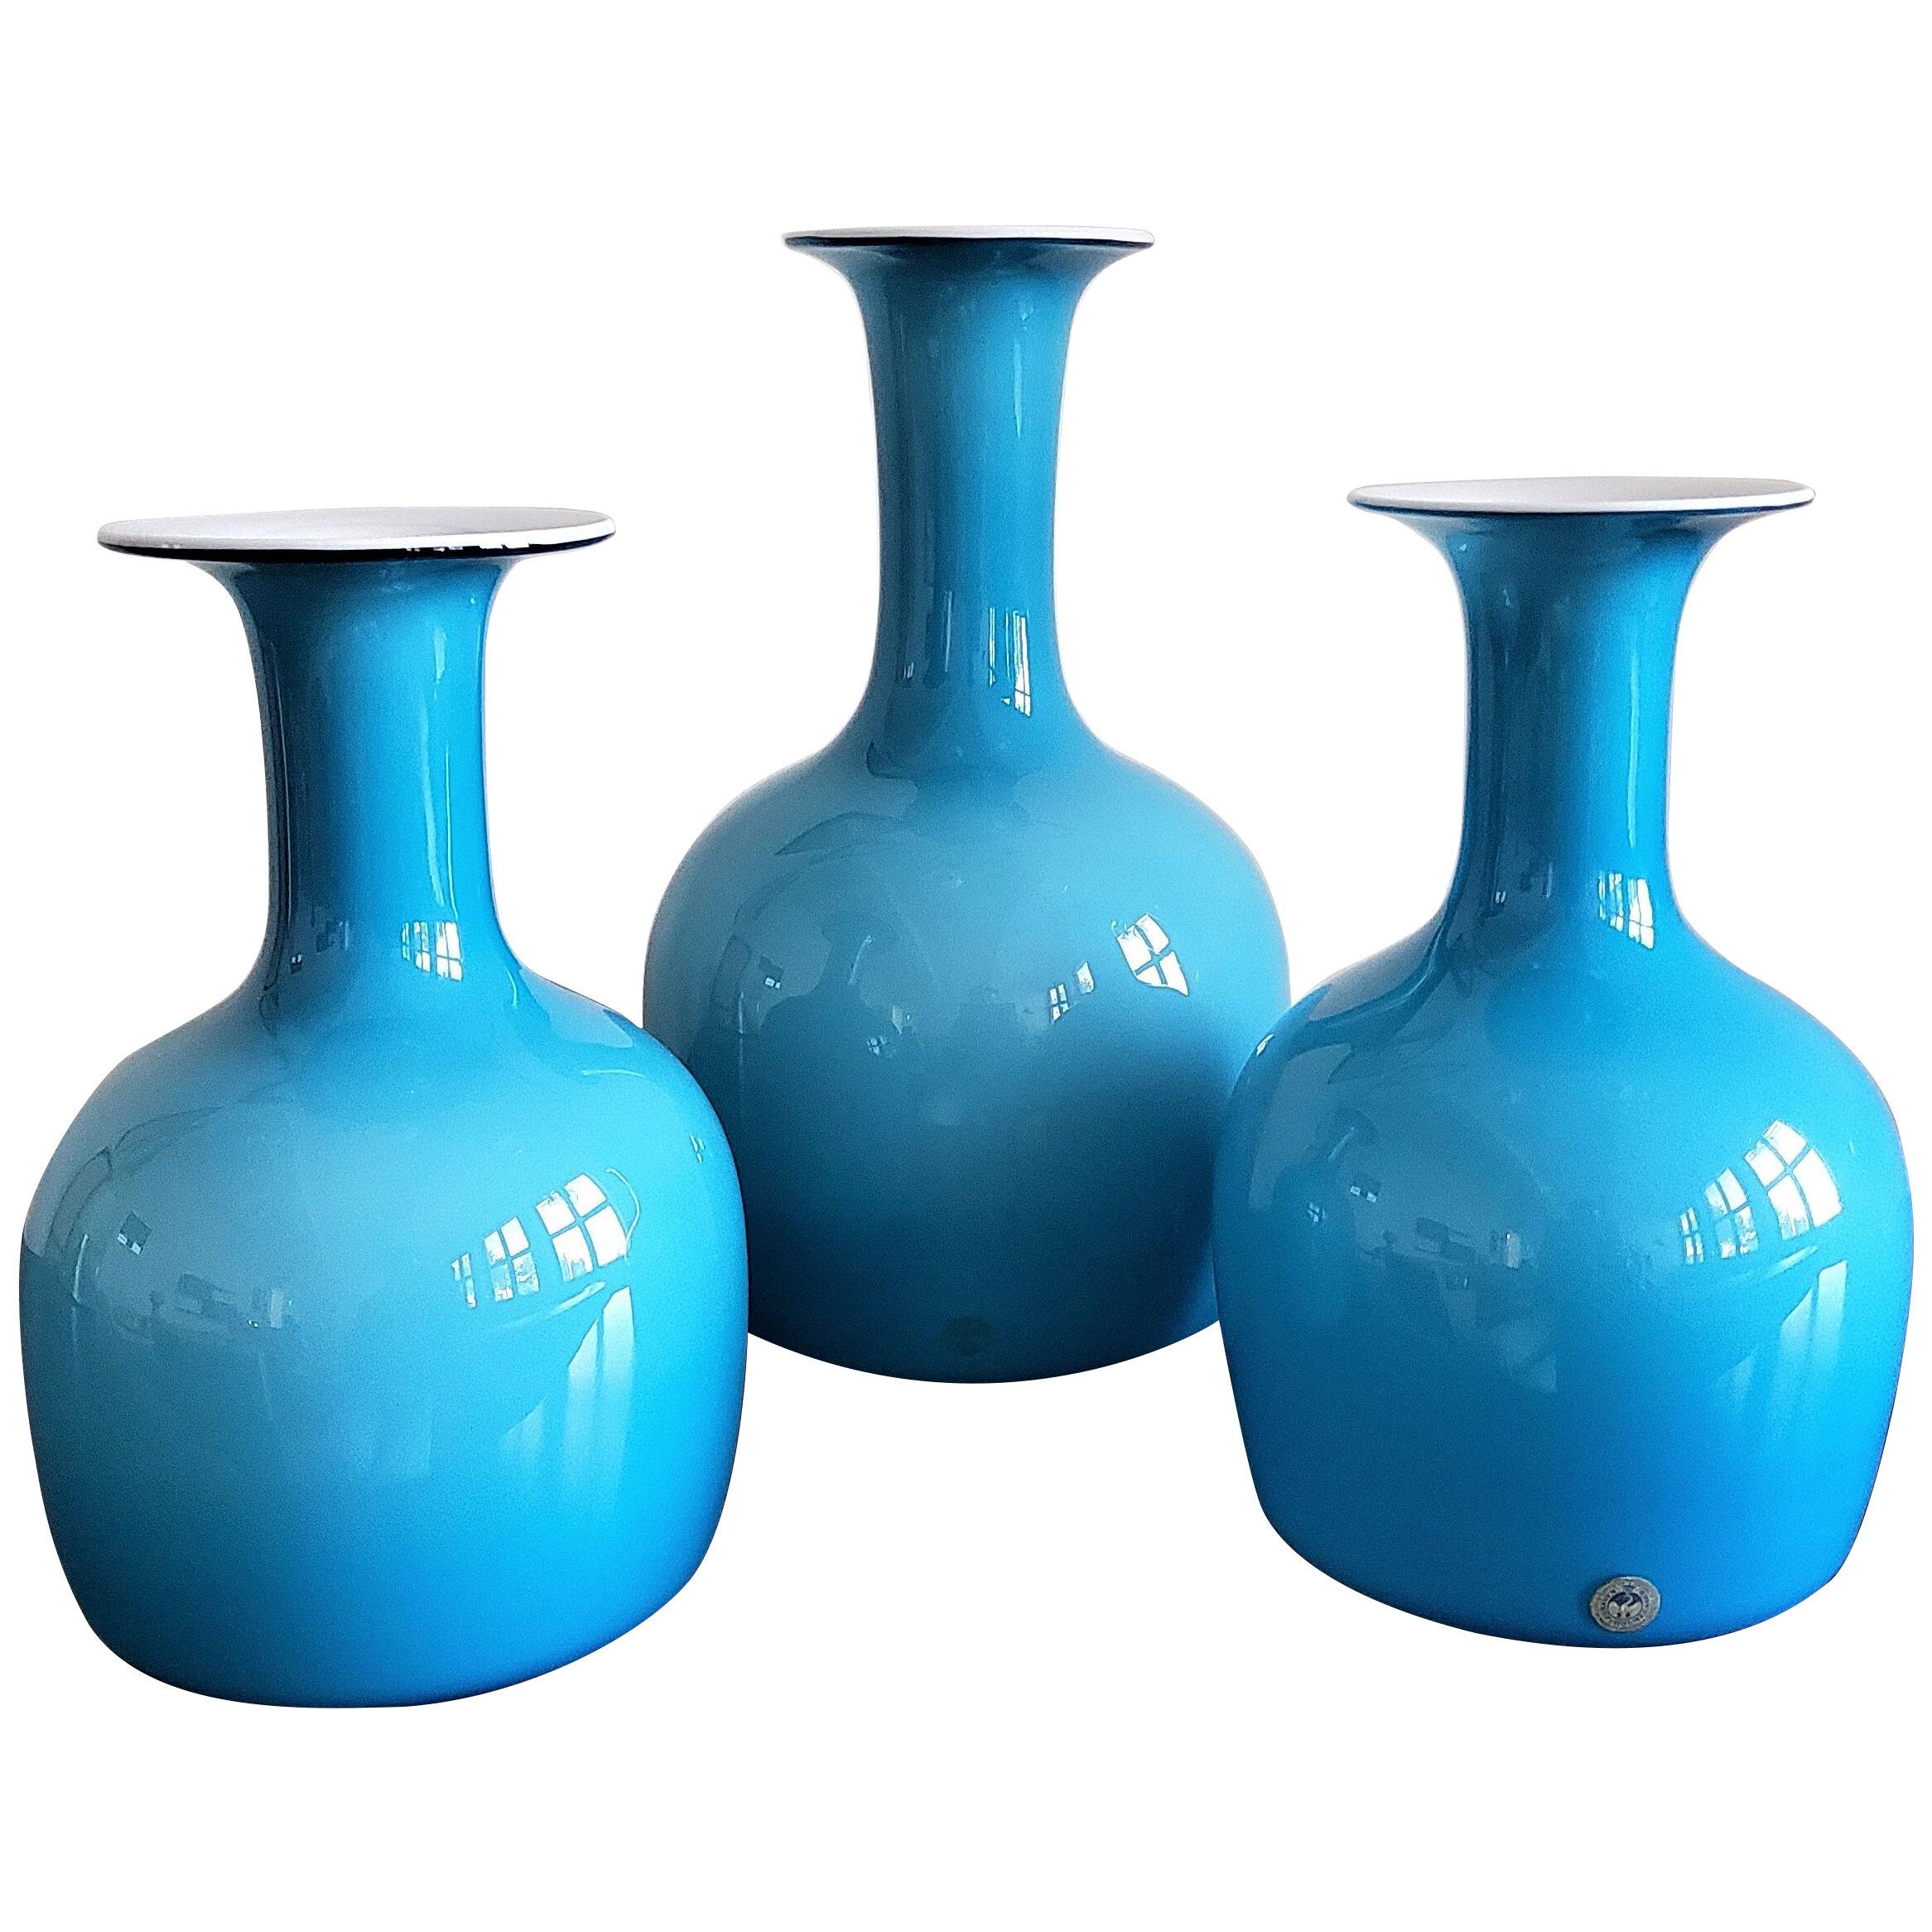 RARE SET OF 3 OPAL BLUE GLASS ‘CARNABY’ VASES BY PER LÜTKEN FOR HOLMEGAARD